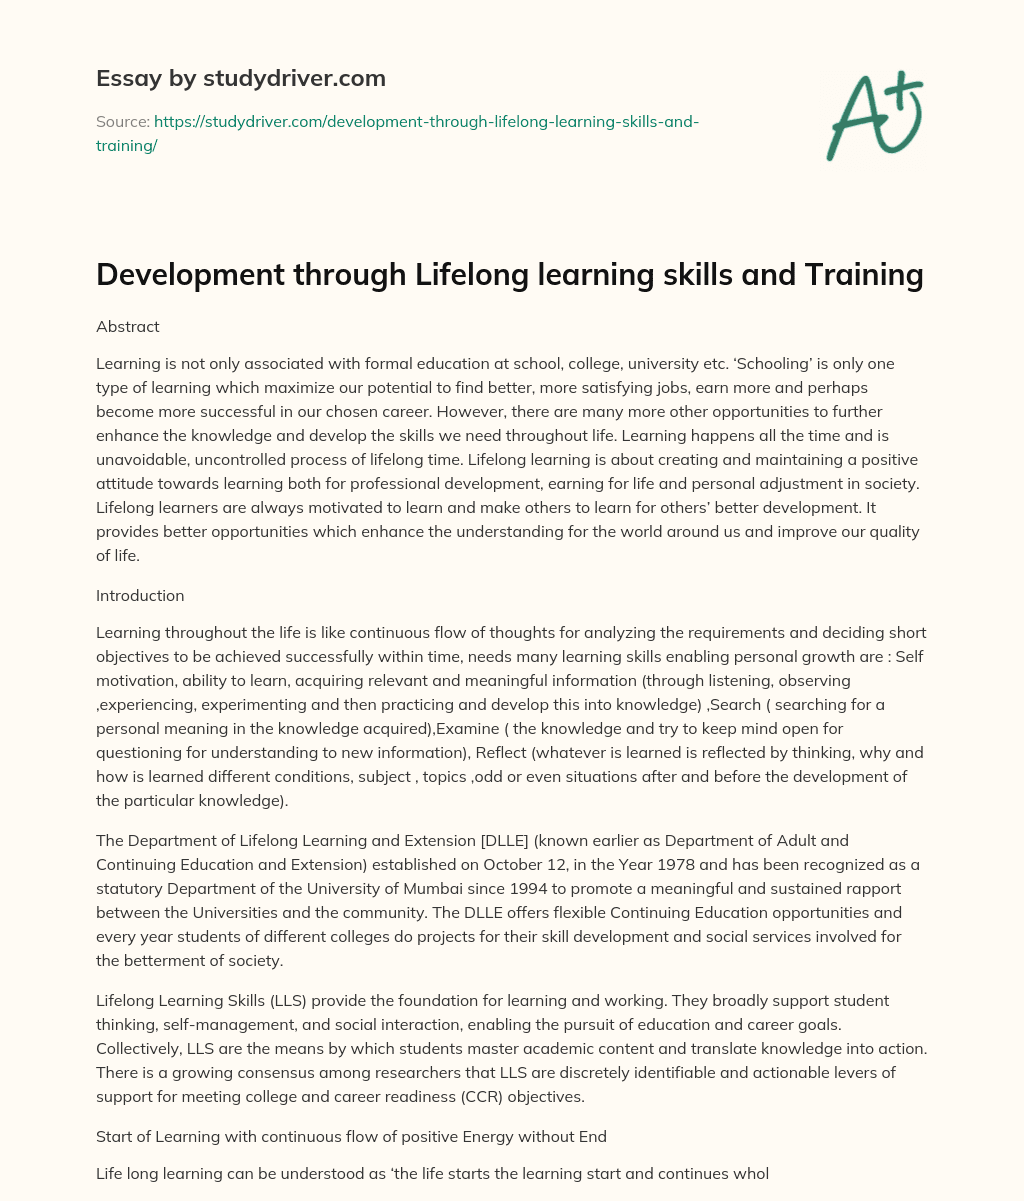 Development through Lifelong Learning Skills and Training essay